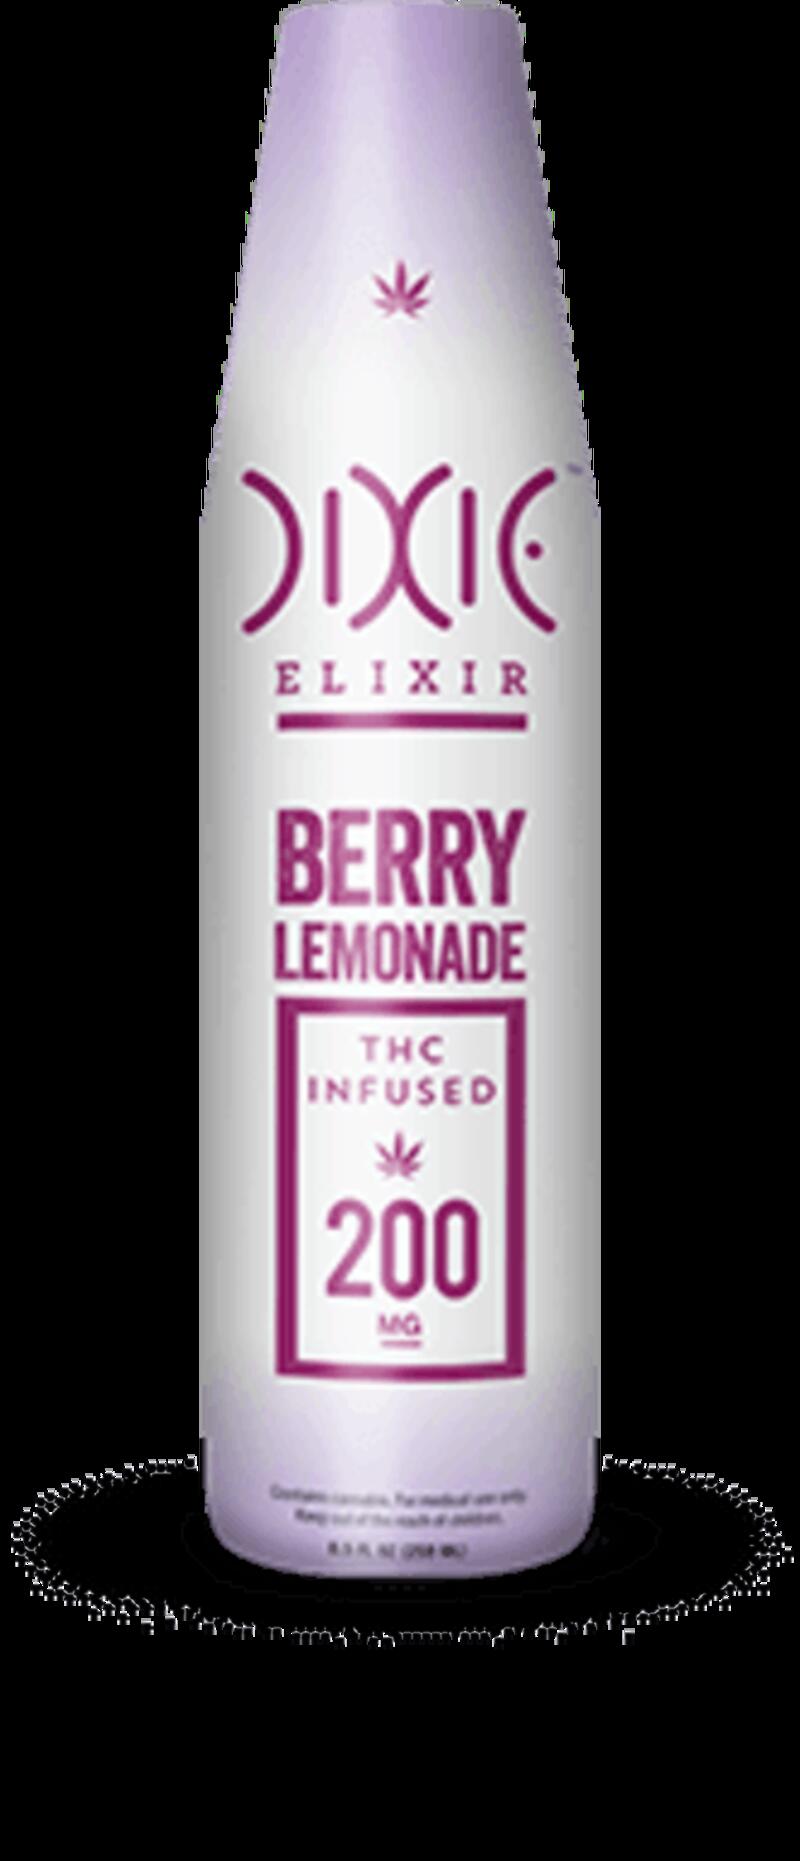 Berry Lemonade 200mg Elixir